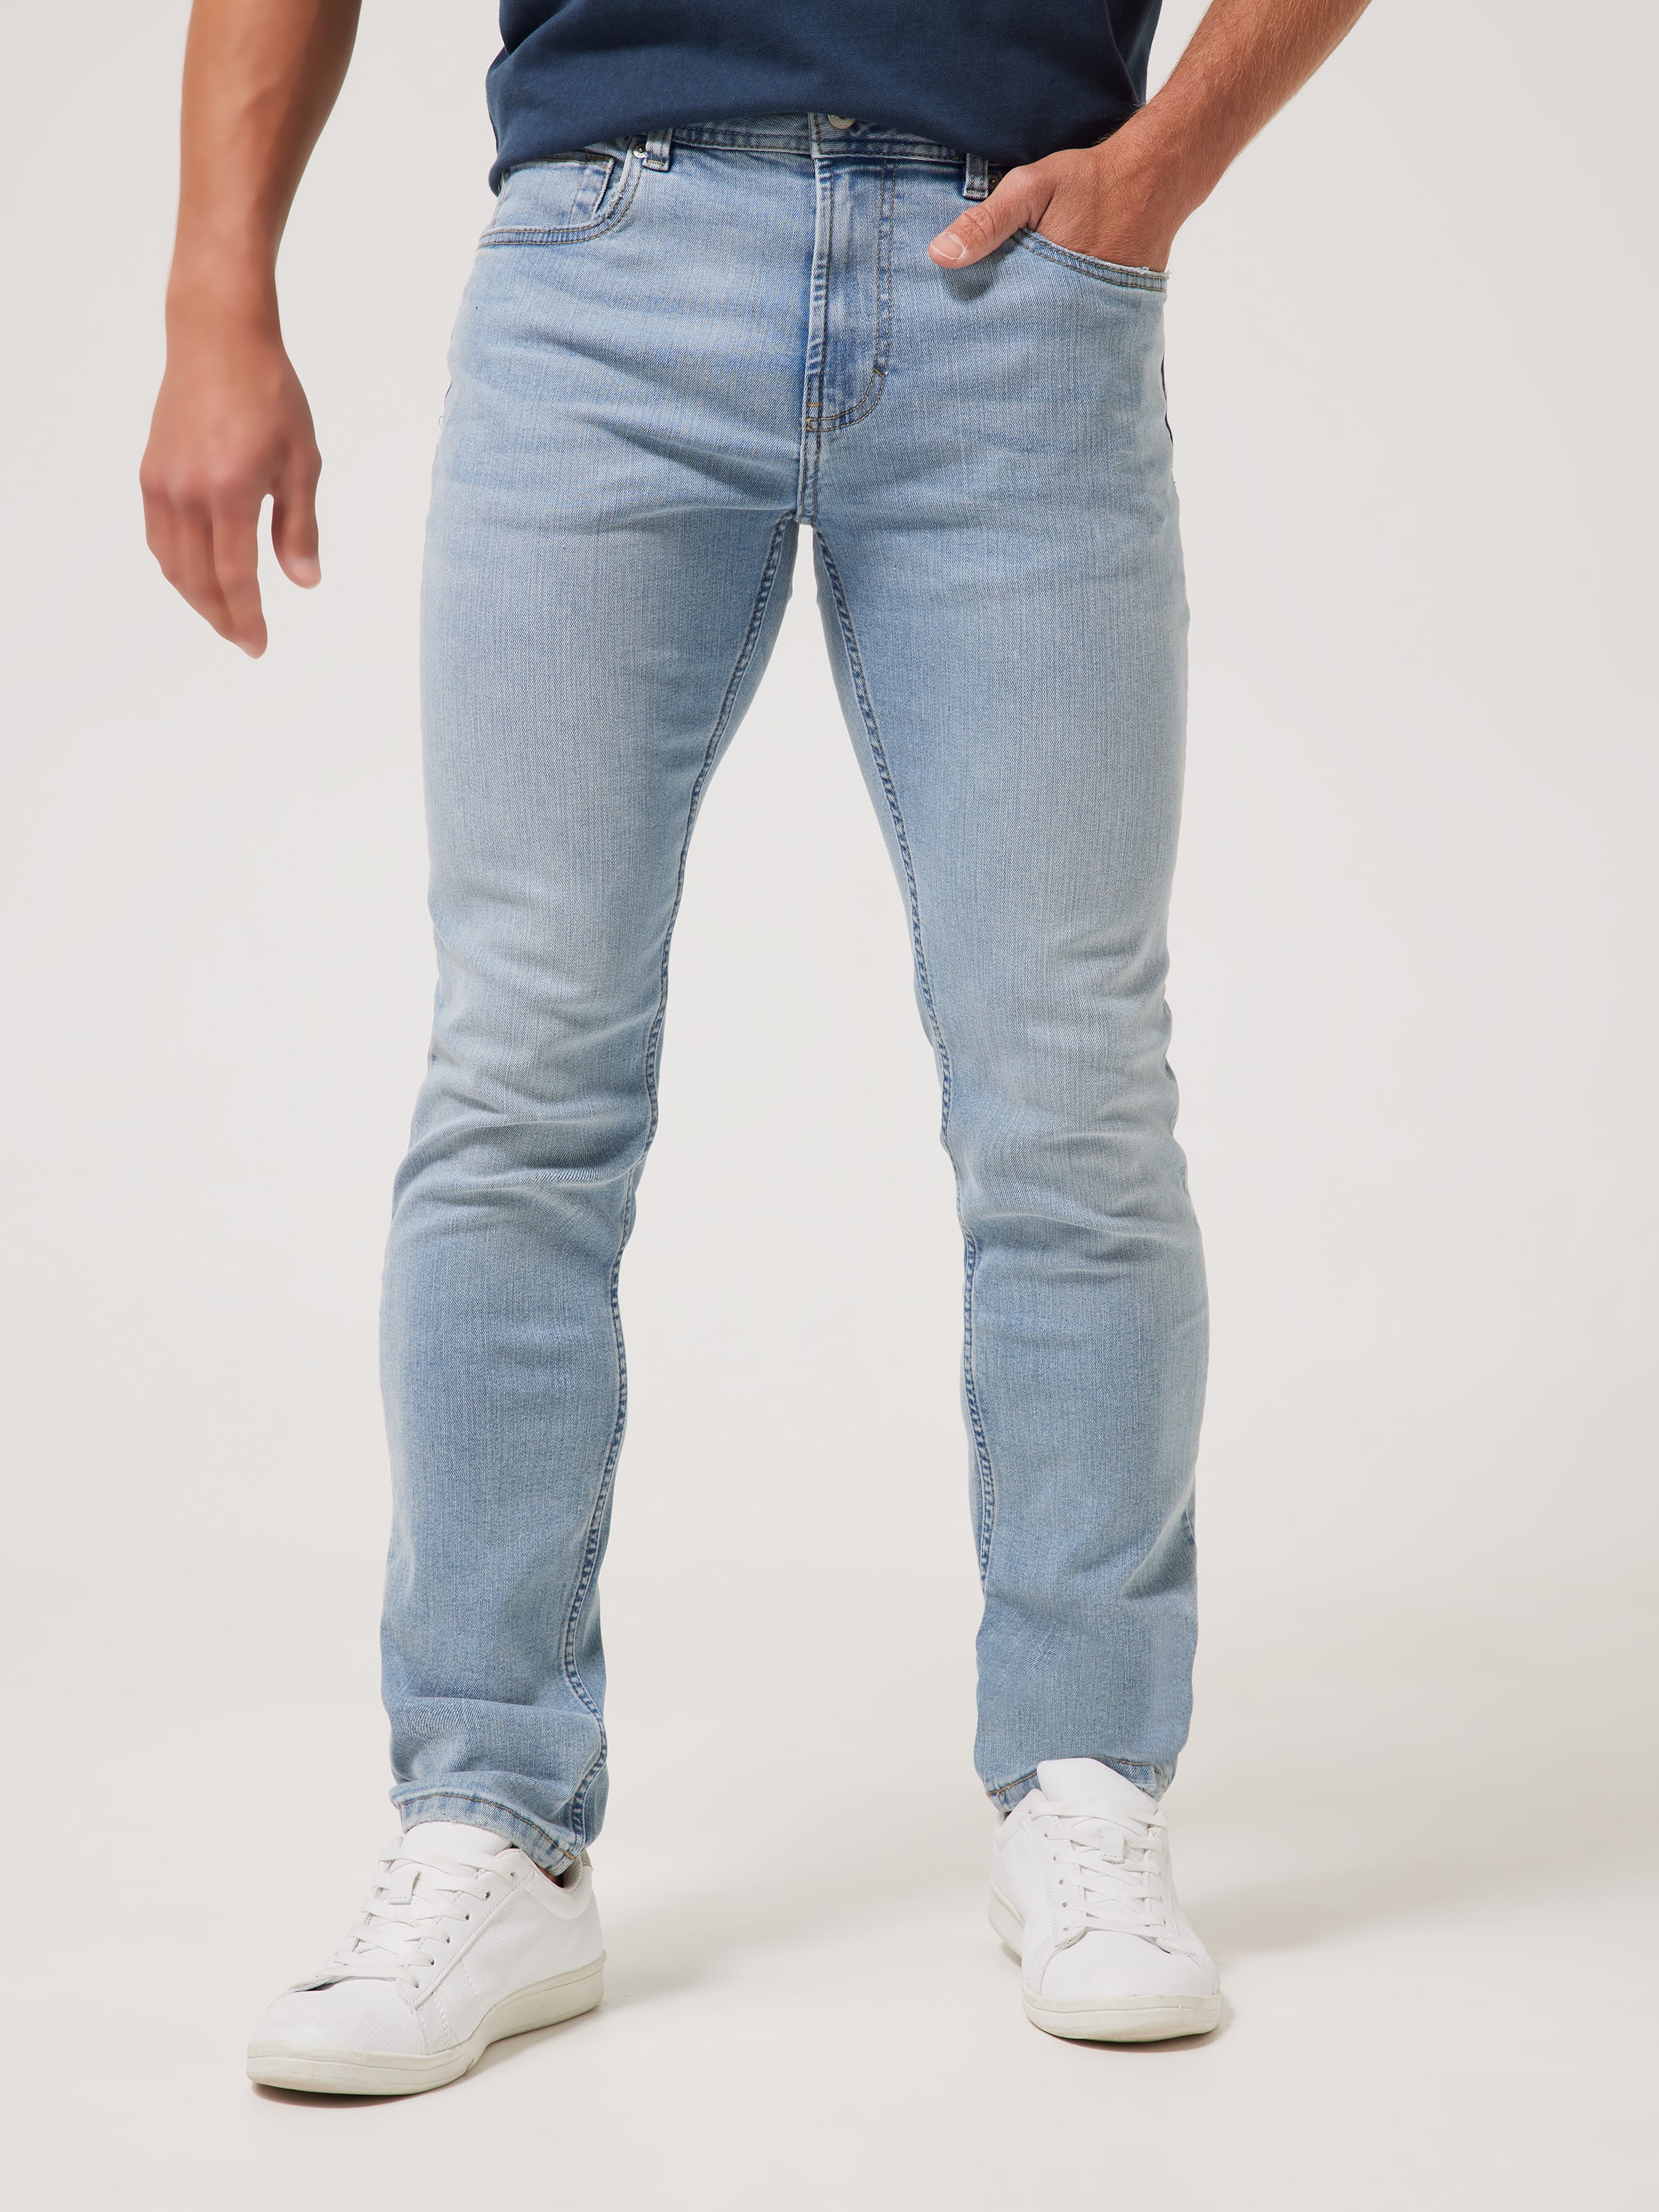 Men's Slim Jeans  Just Jeans Online